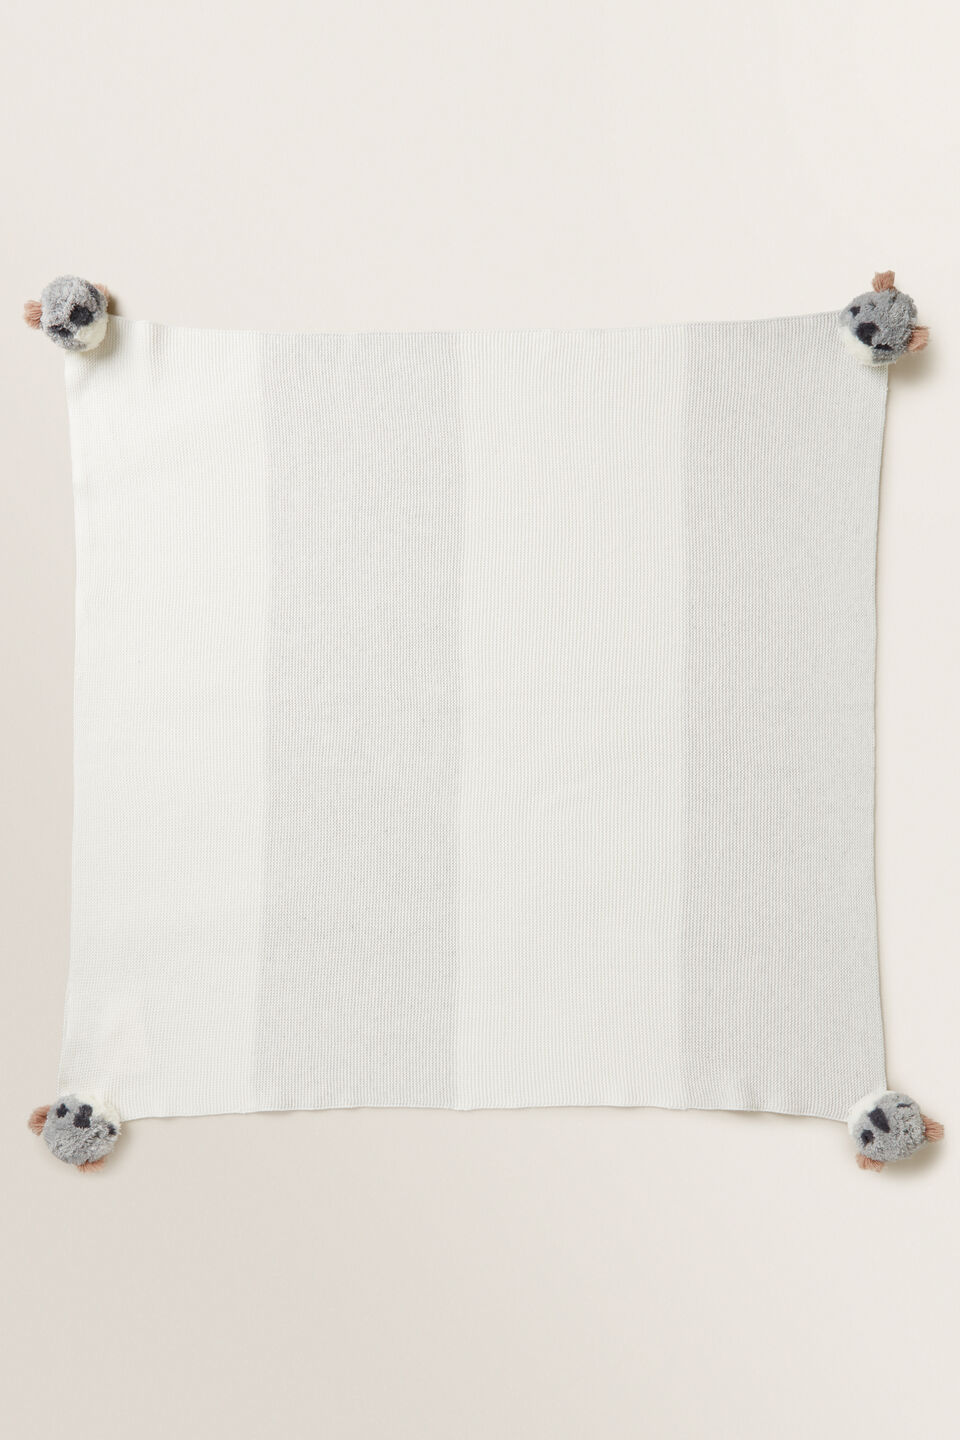 Bear Pom Pom Blanket  